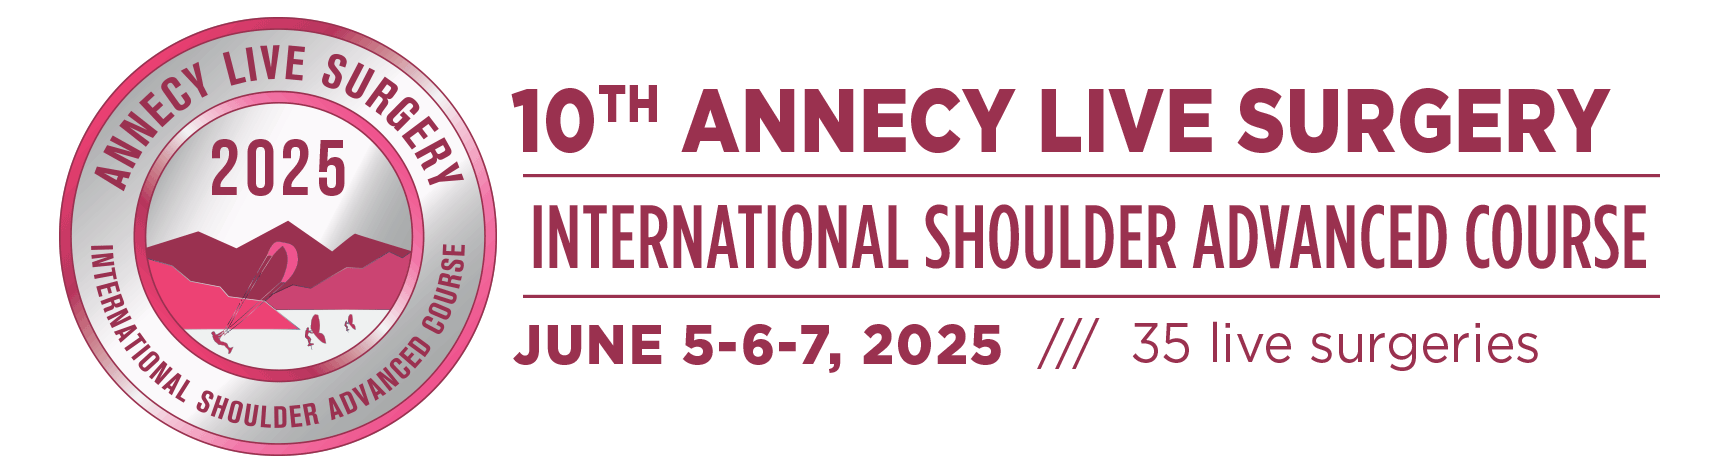 10th Annecy Live Surgery / June 5-6-7, 2025 International Shoulder Advanced Course